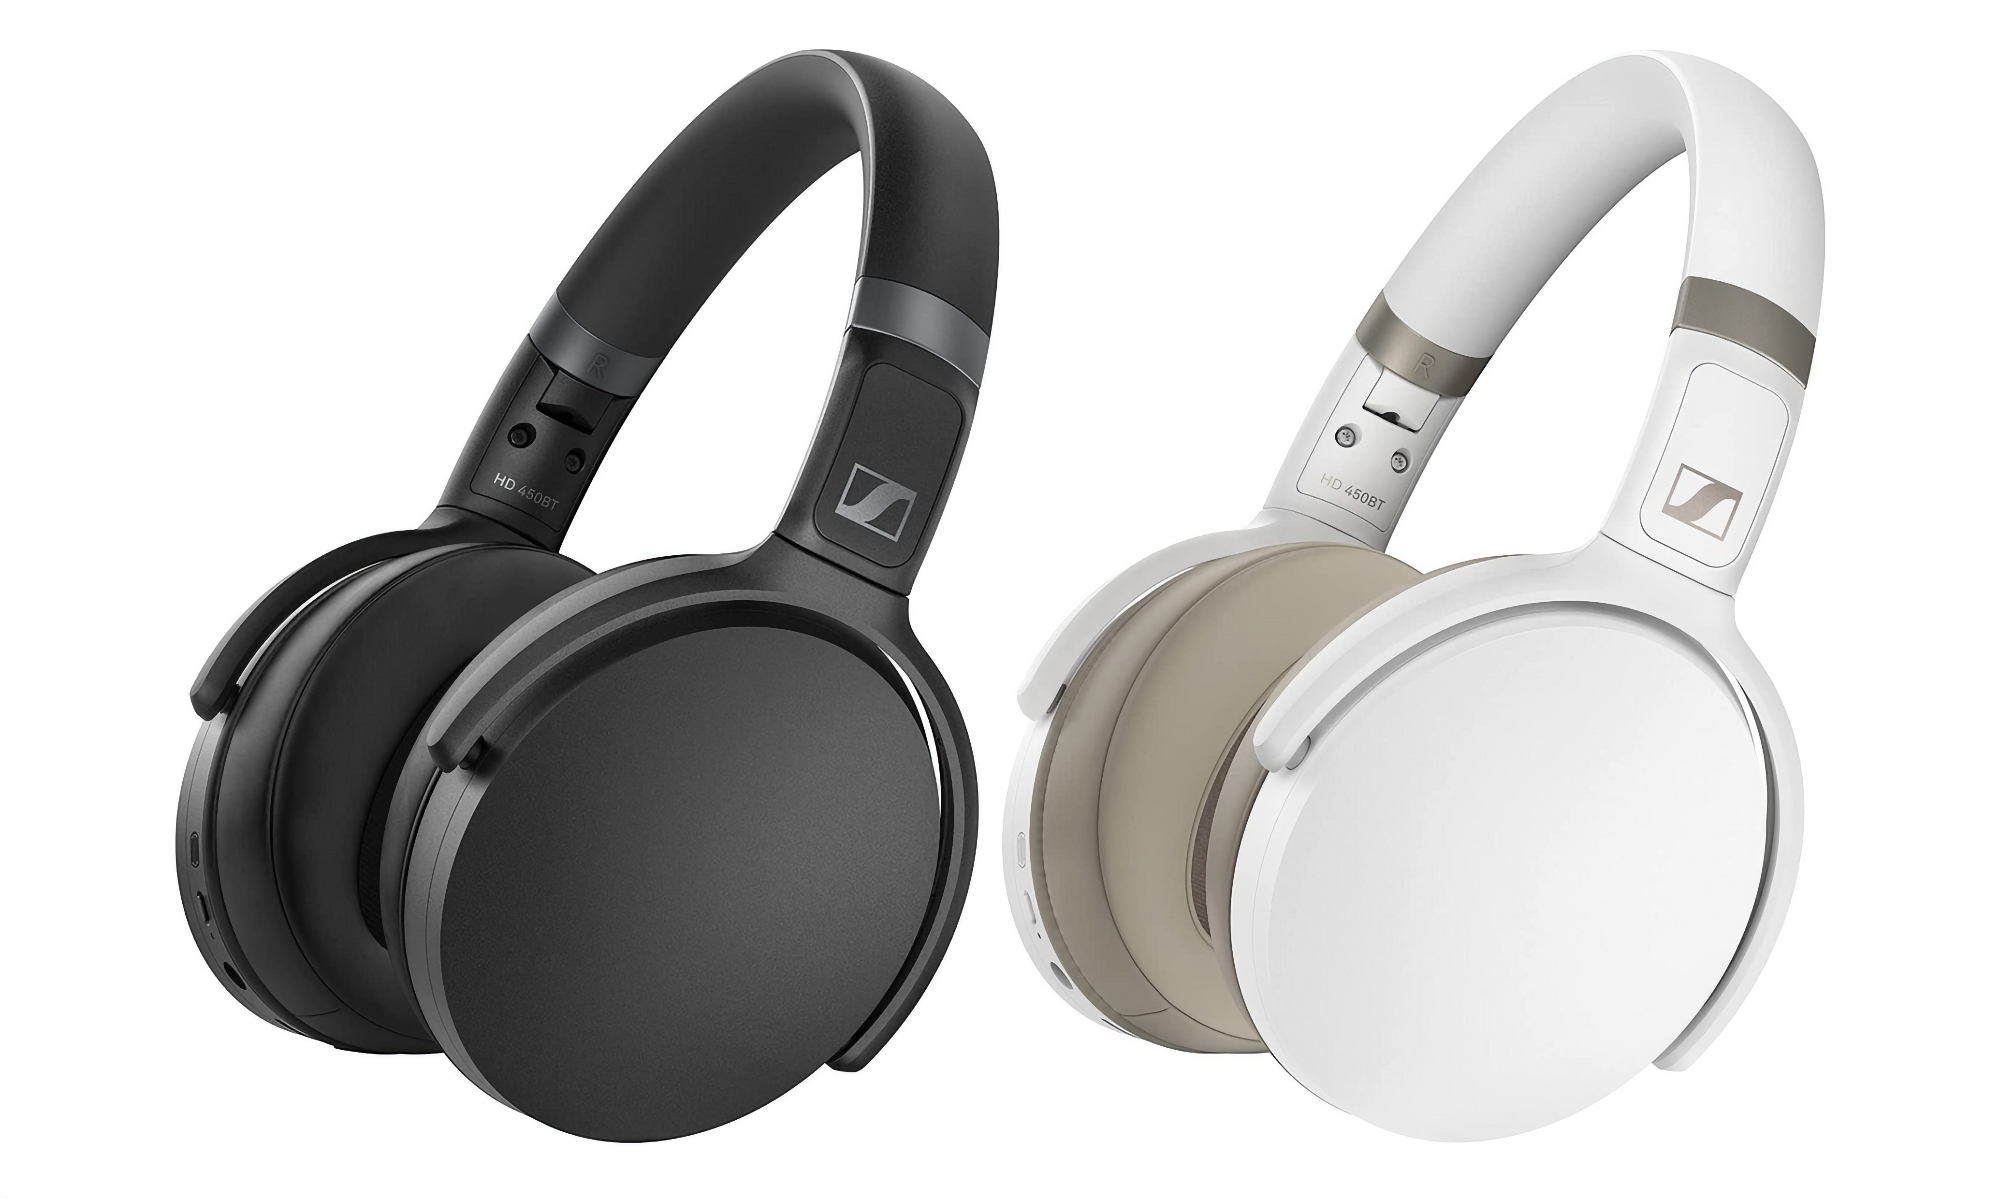 96 dólares en lugar de 200: auriculares inalámbricos Sennheiser HD450BT con ANC en Amazon con un gran descuento